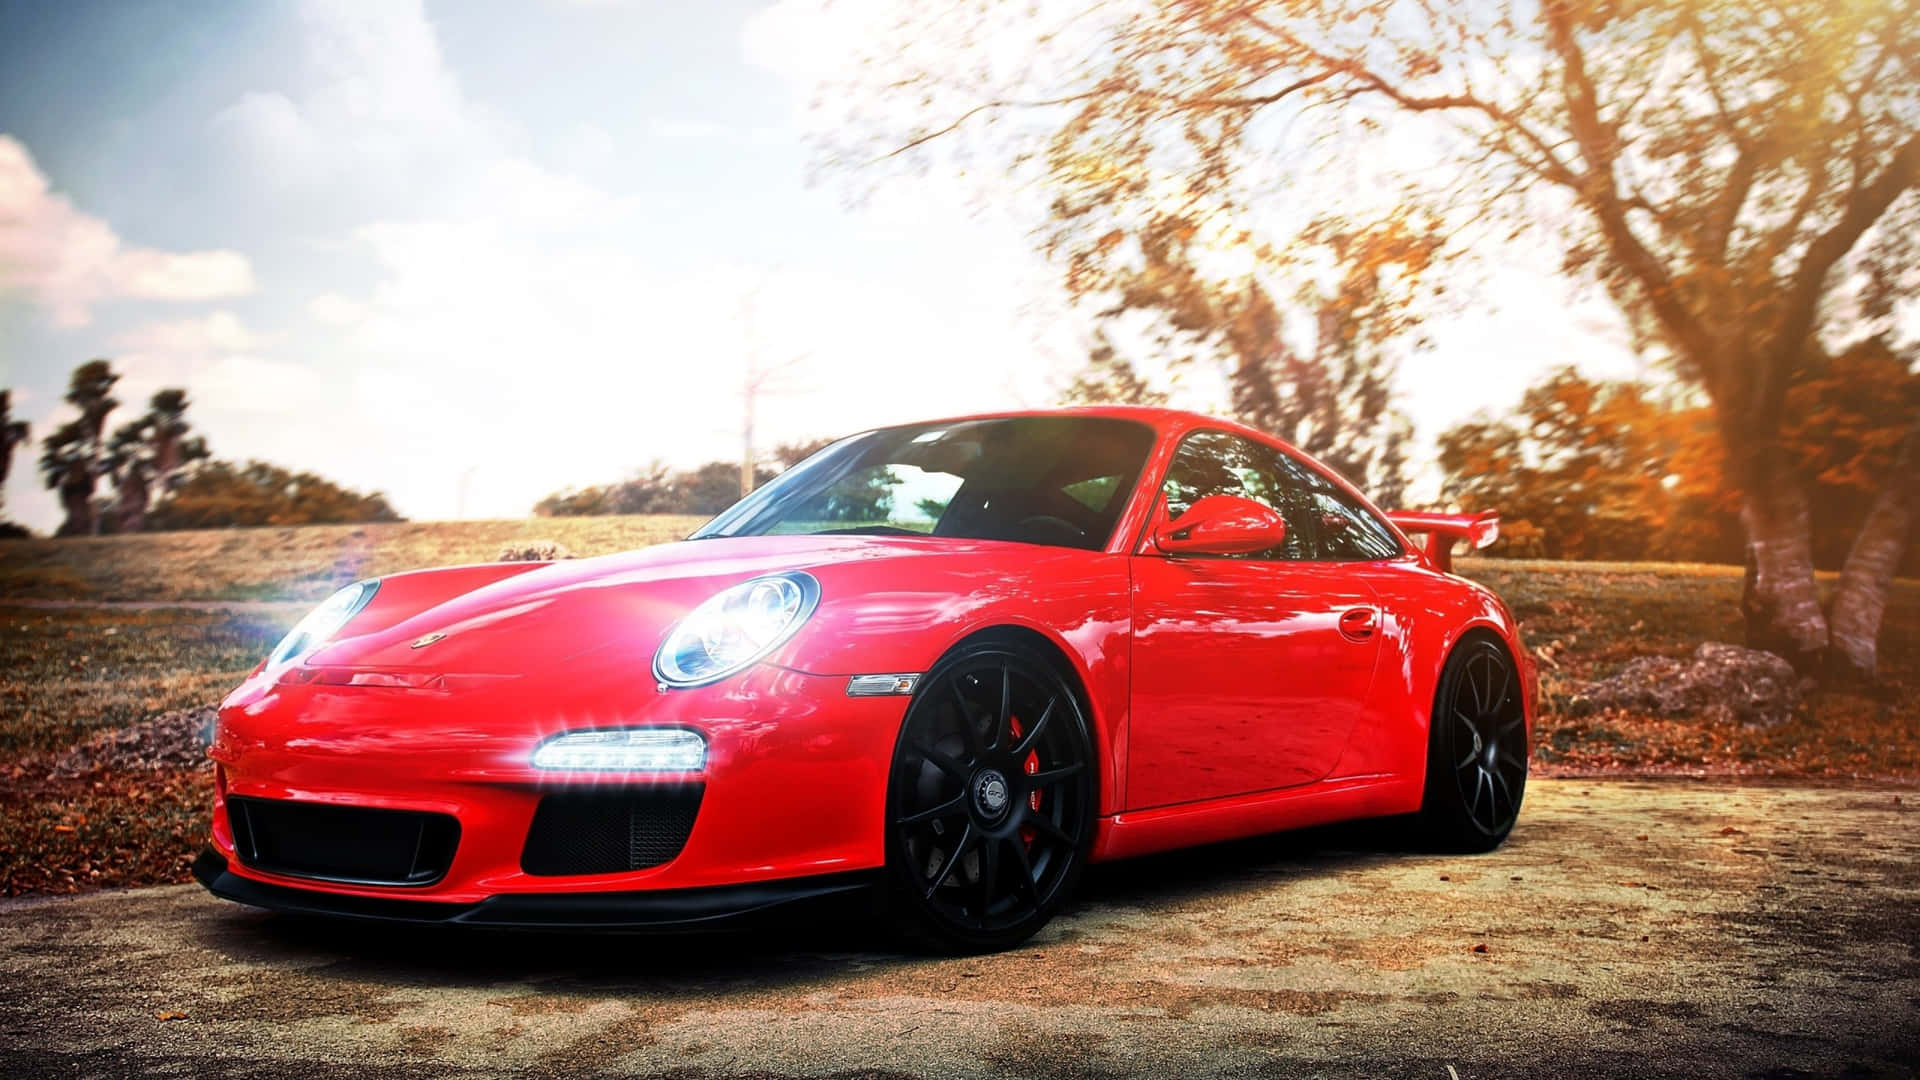 An Incredible 4k Ultra Hd Porsche Image Background